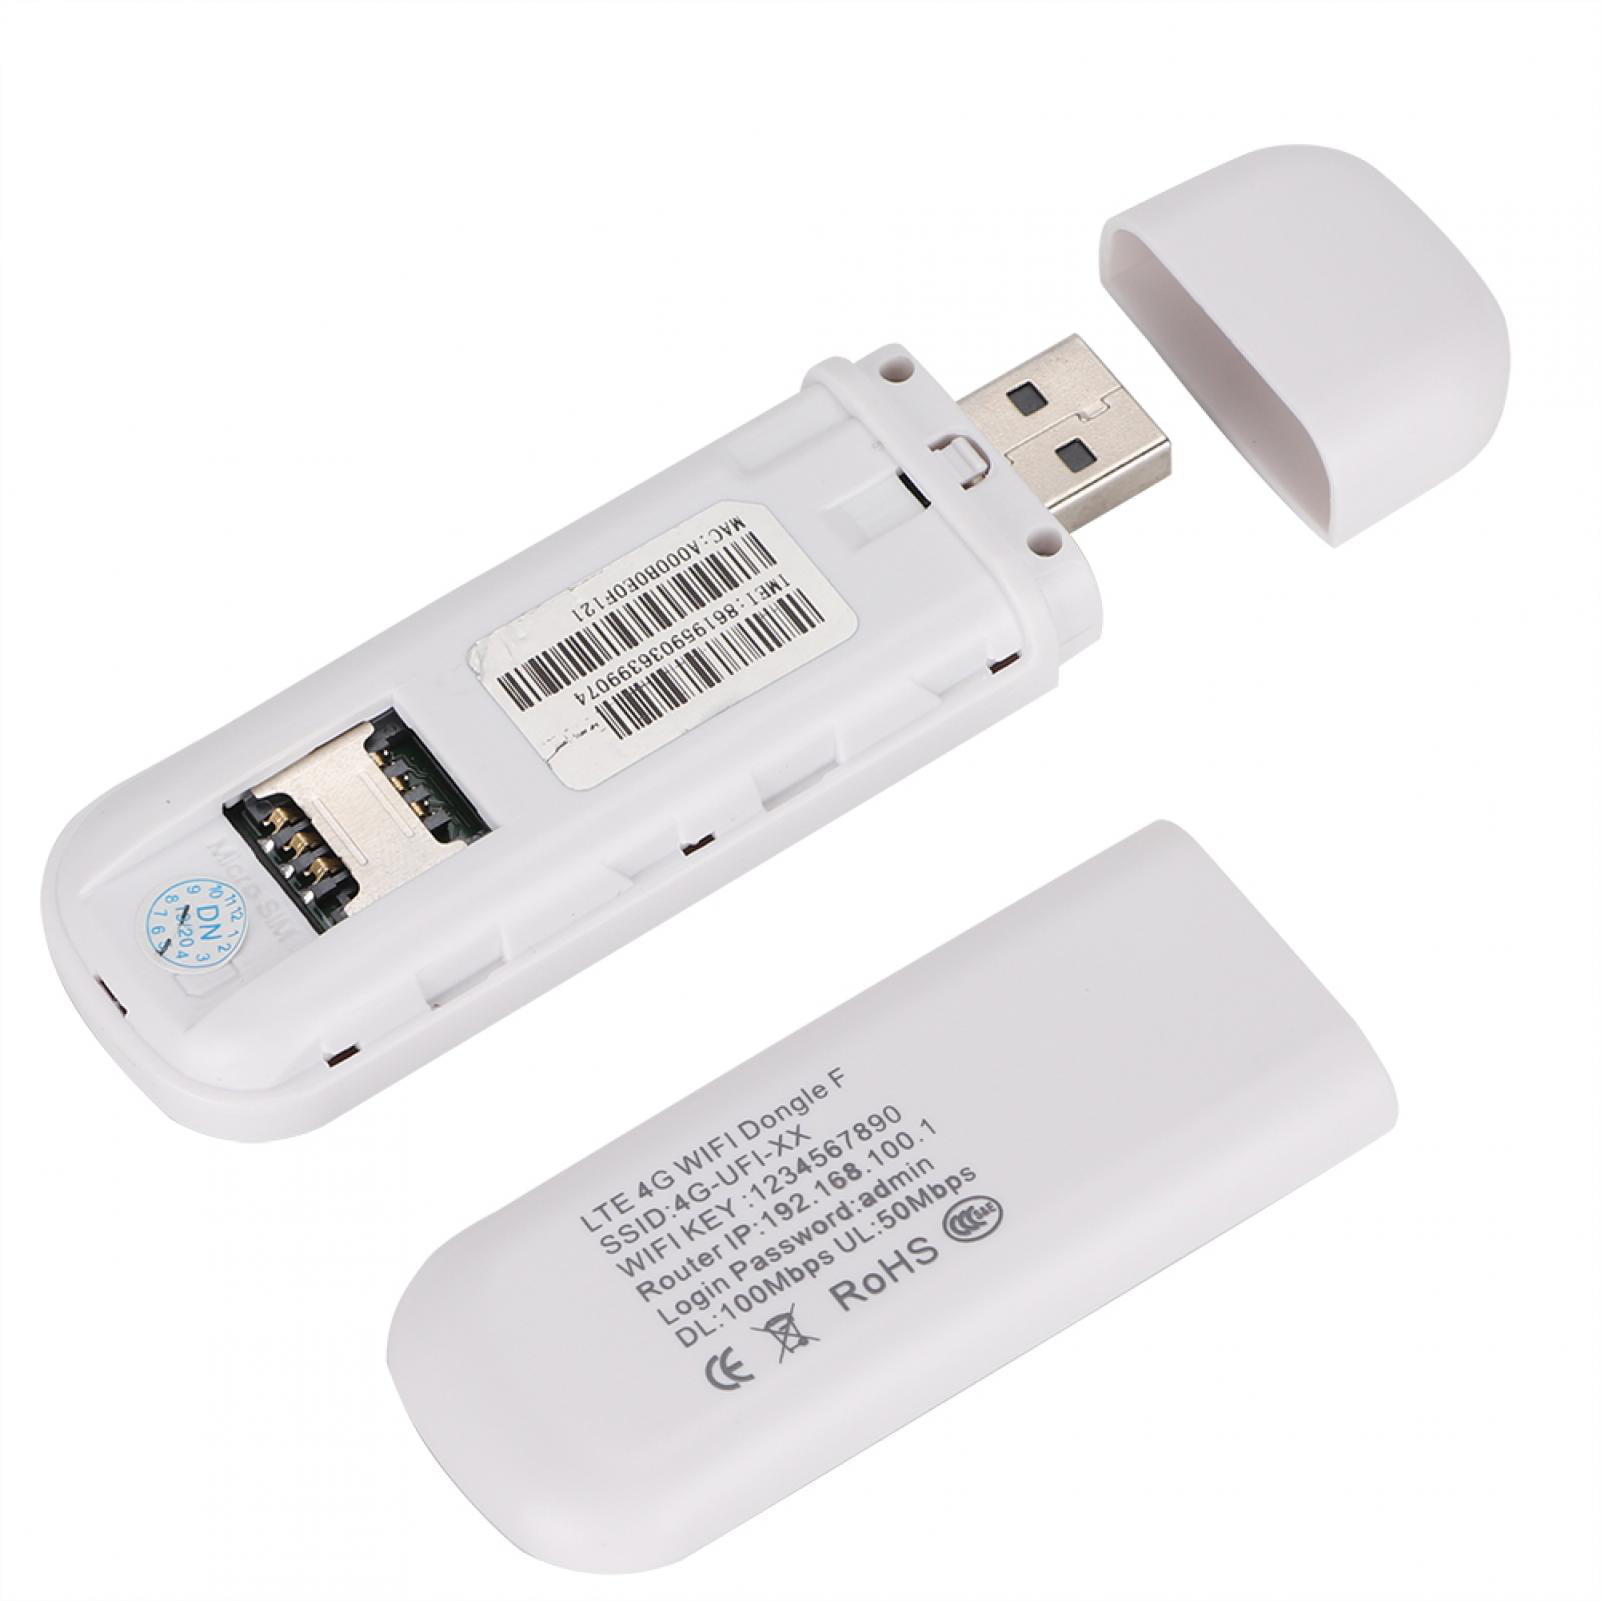 WIFI стик. SIM модем. Mikrotik USB Modem Stick. Router on a Stick. Стик фай